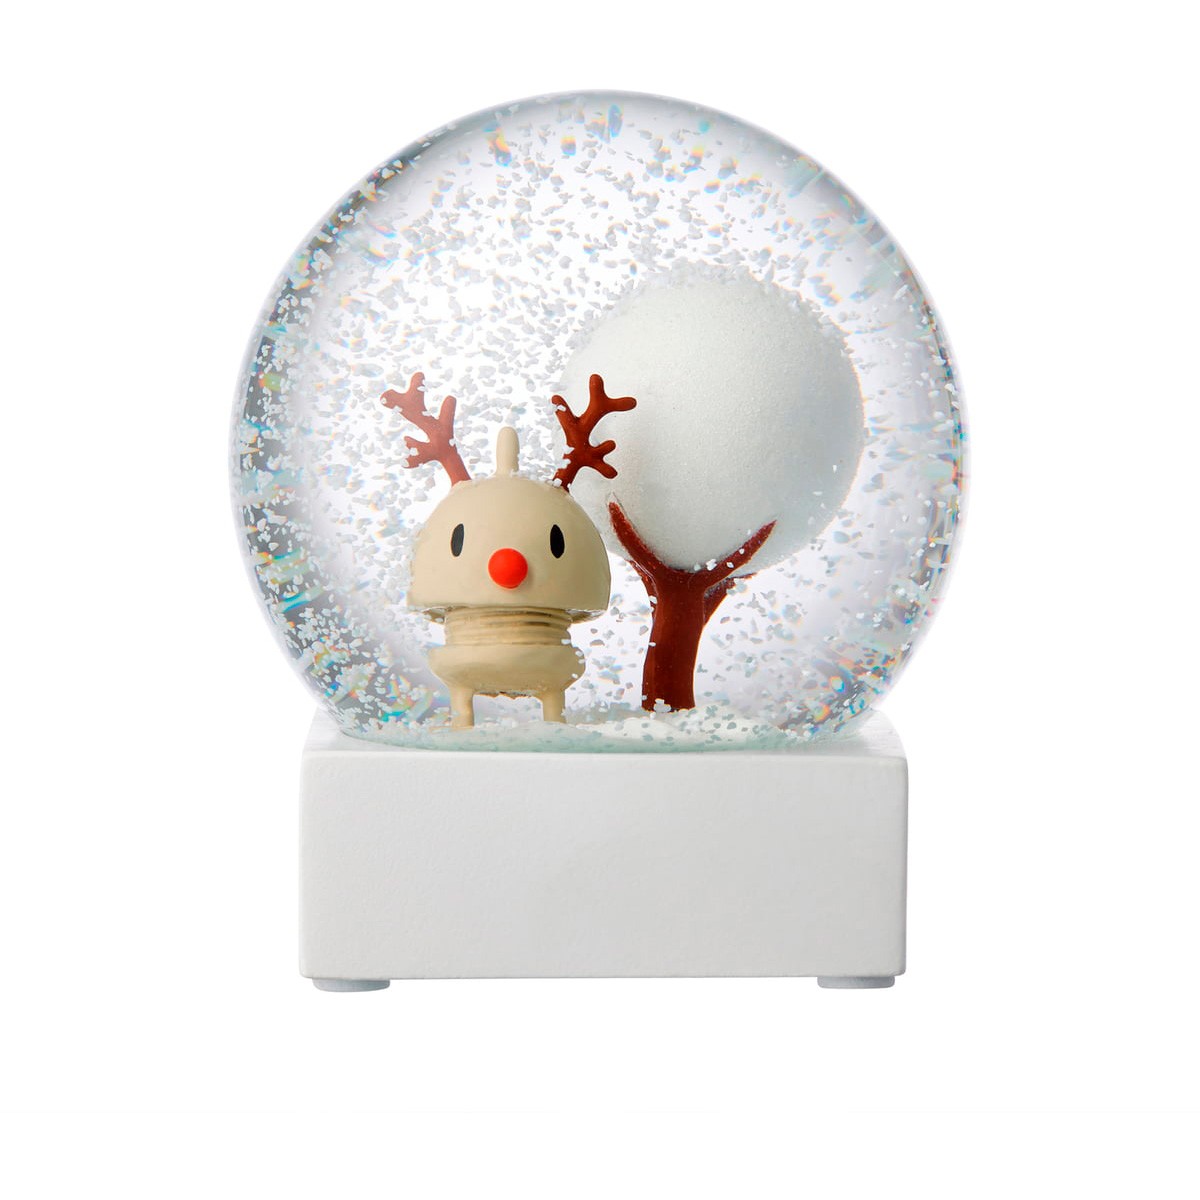 Hopitimst Reindeer Snow Globe figur Latte stor